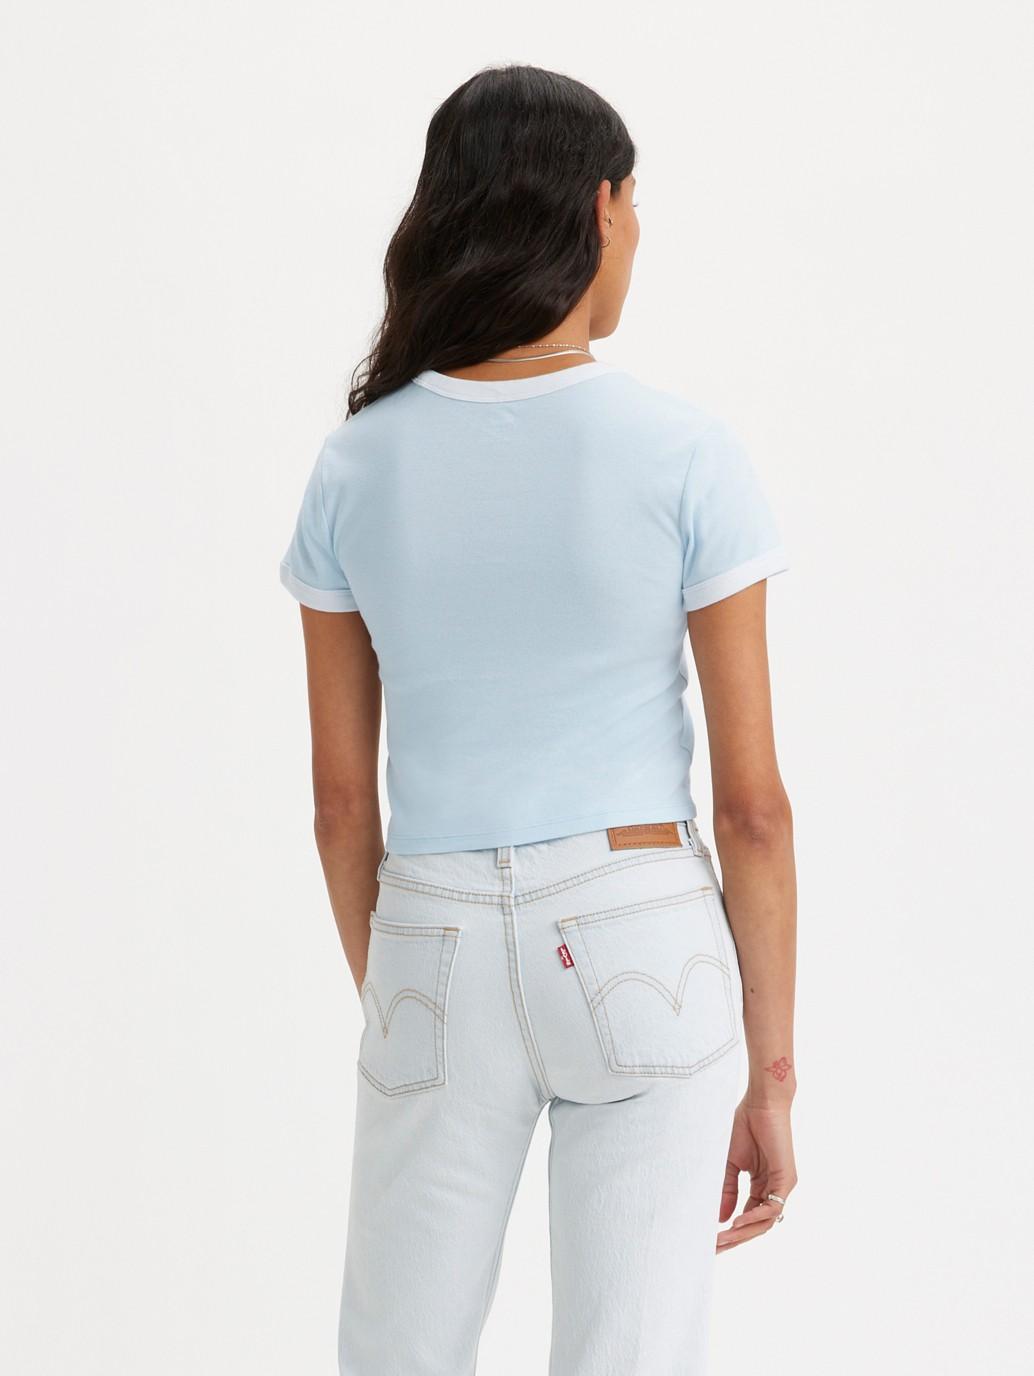 Buy Levi's® Women's Graphic Ringer Mini T-Shirt| Levi’s® Official ...